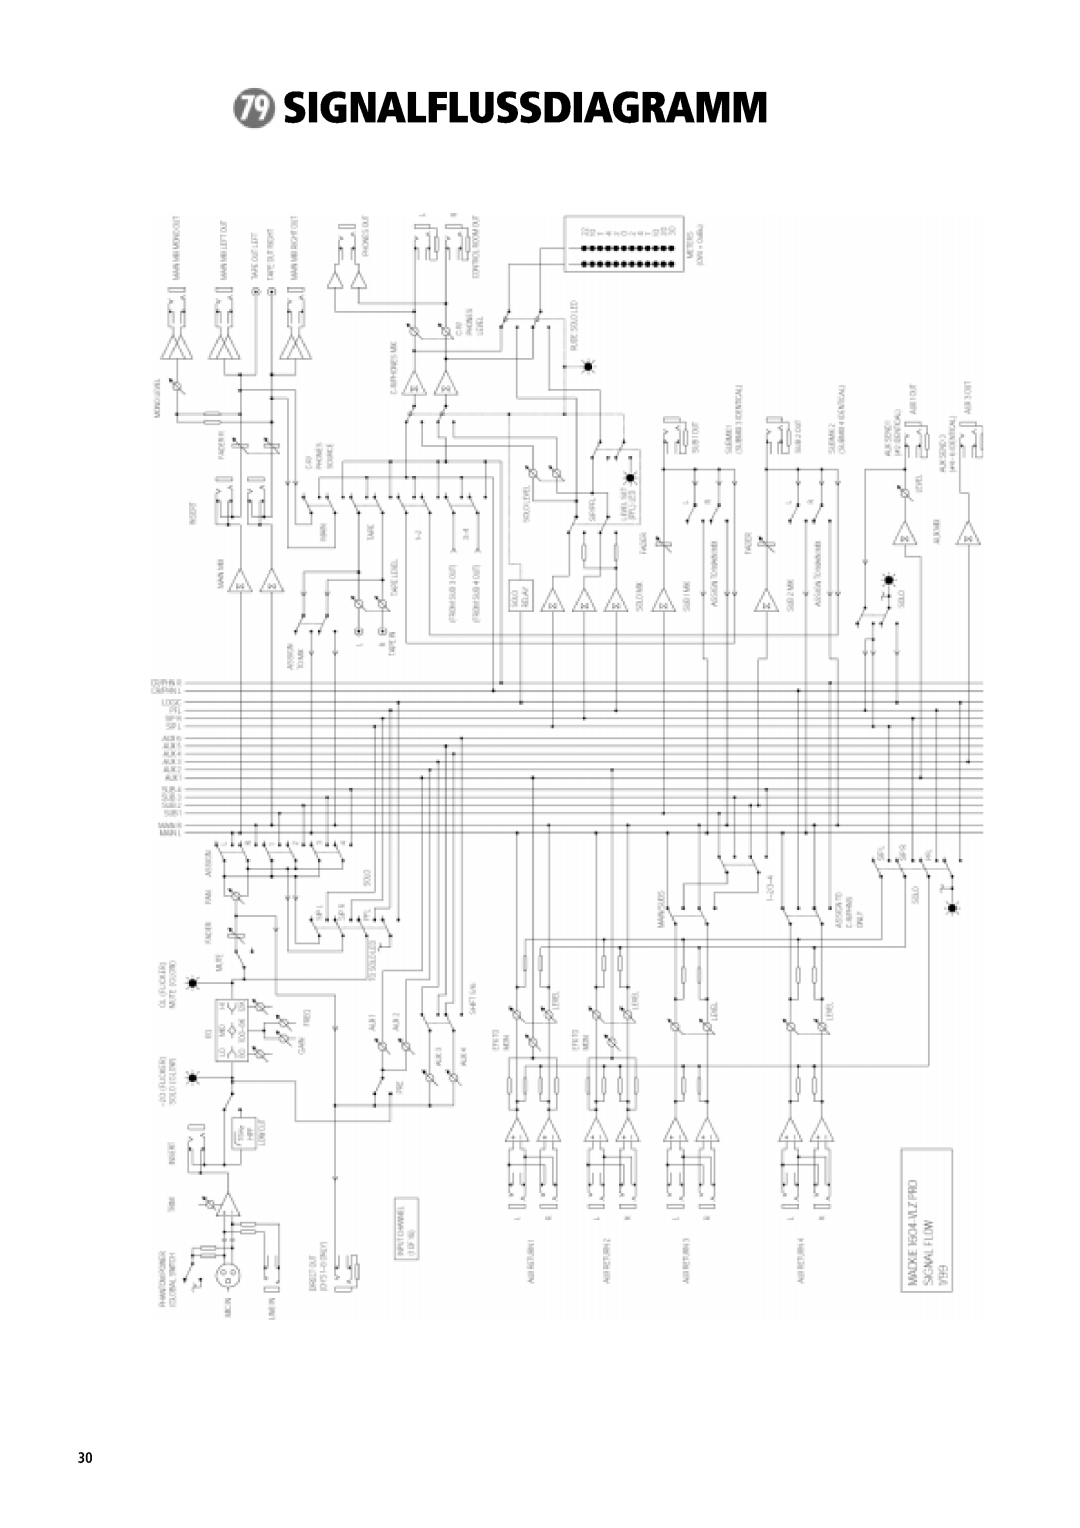 Mackie 1604-VLZ manual Signalflussdiagramm 